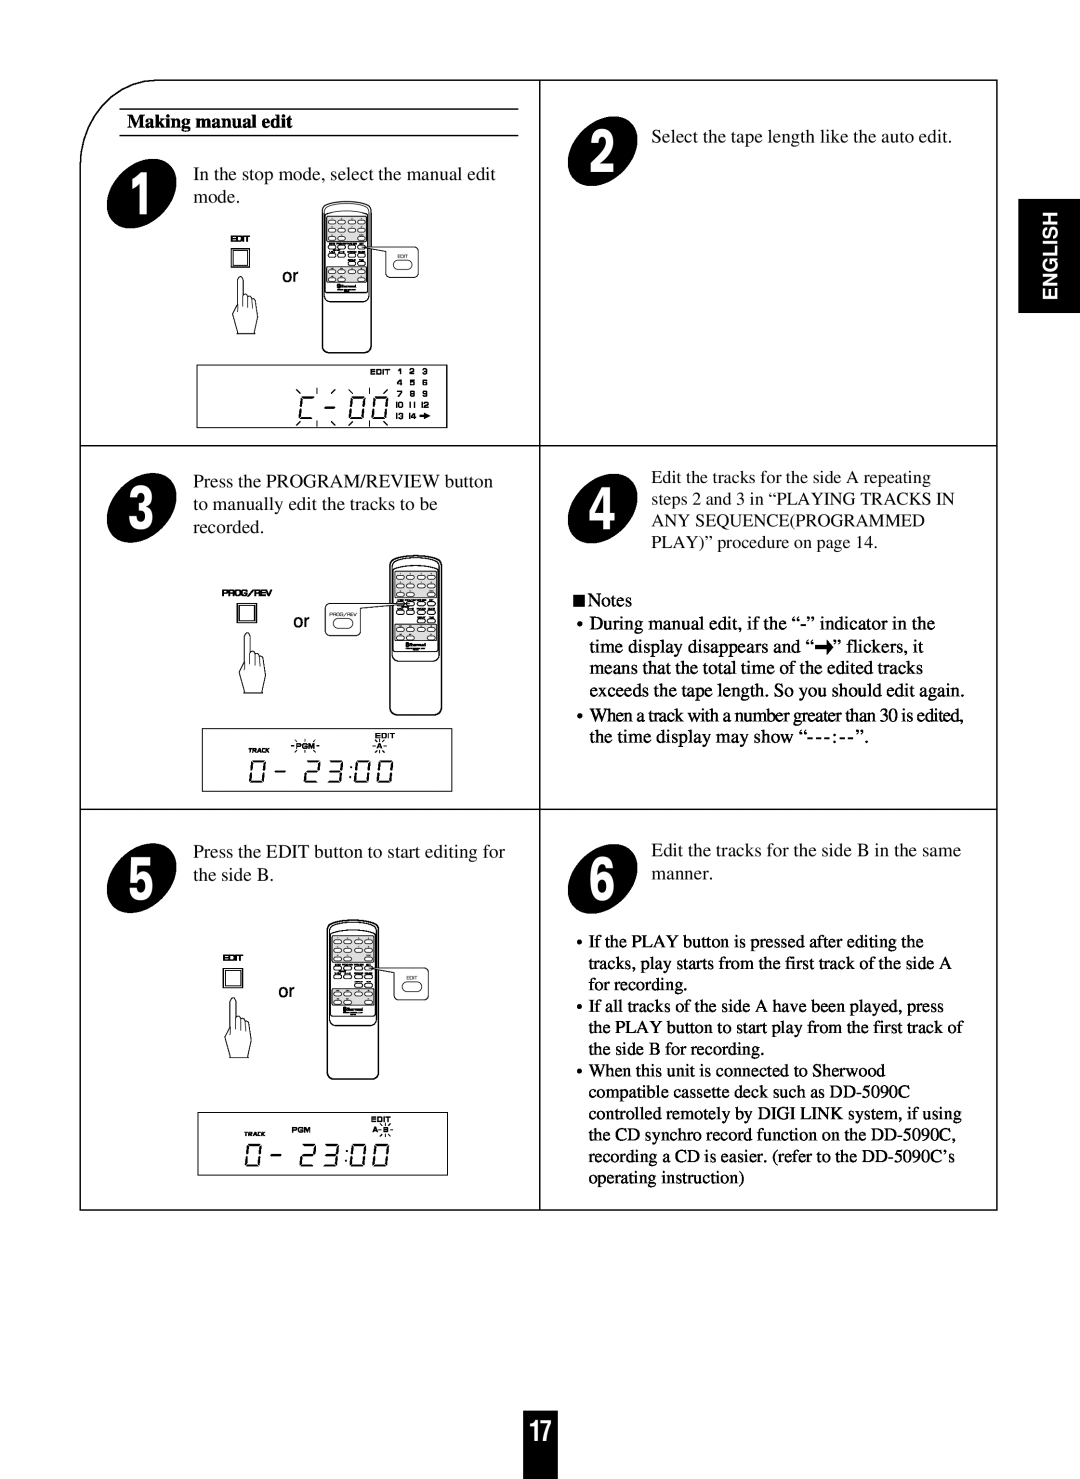 Sherwood CD-5090C/R operating instructions Making manual edit, English 